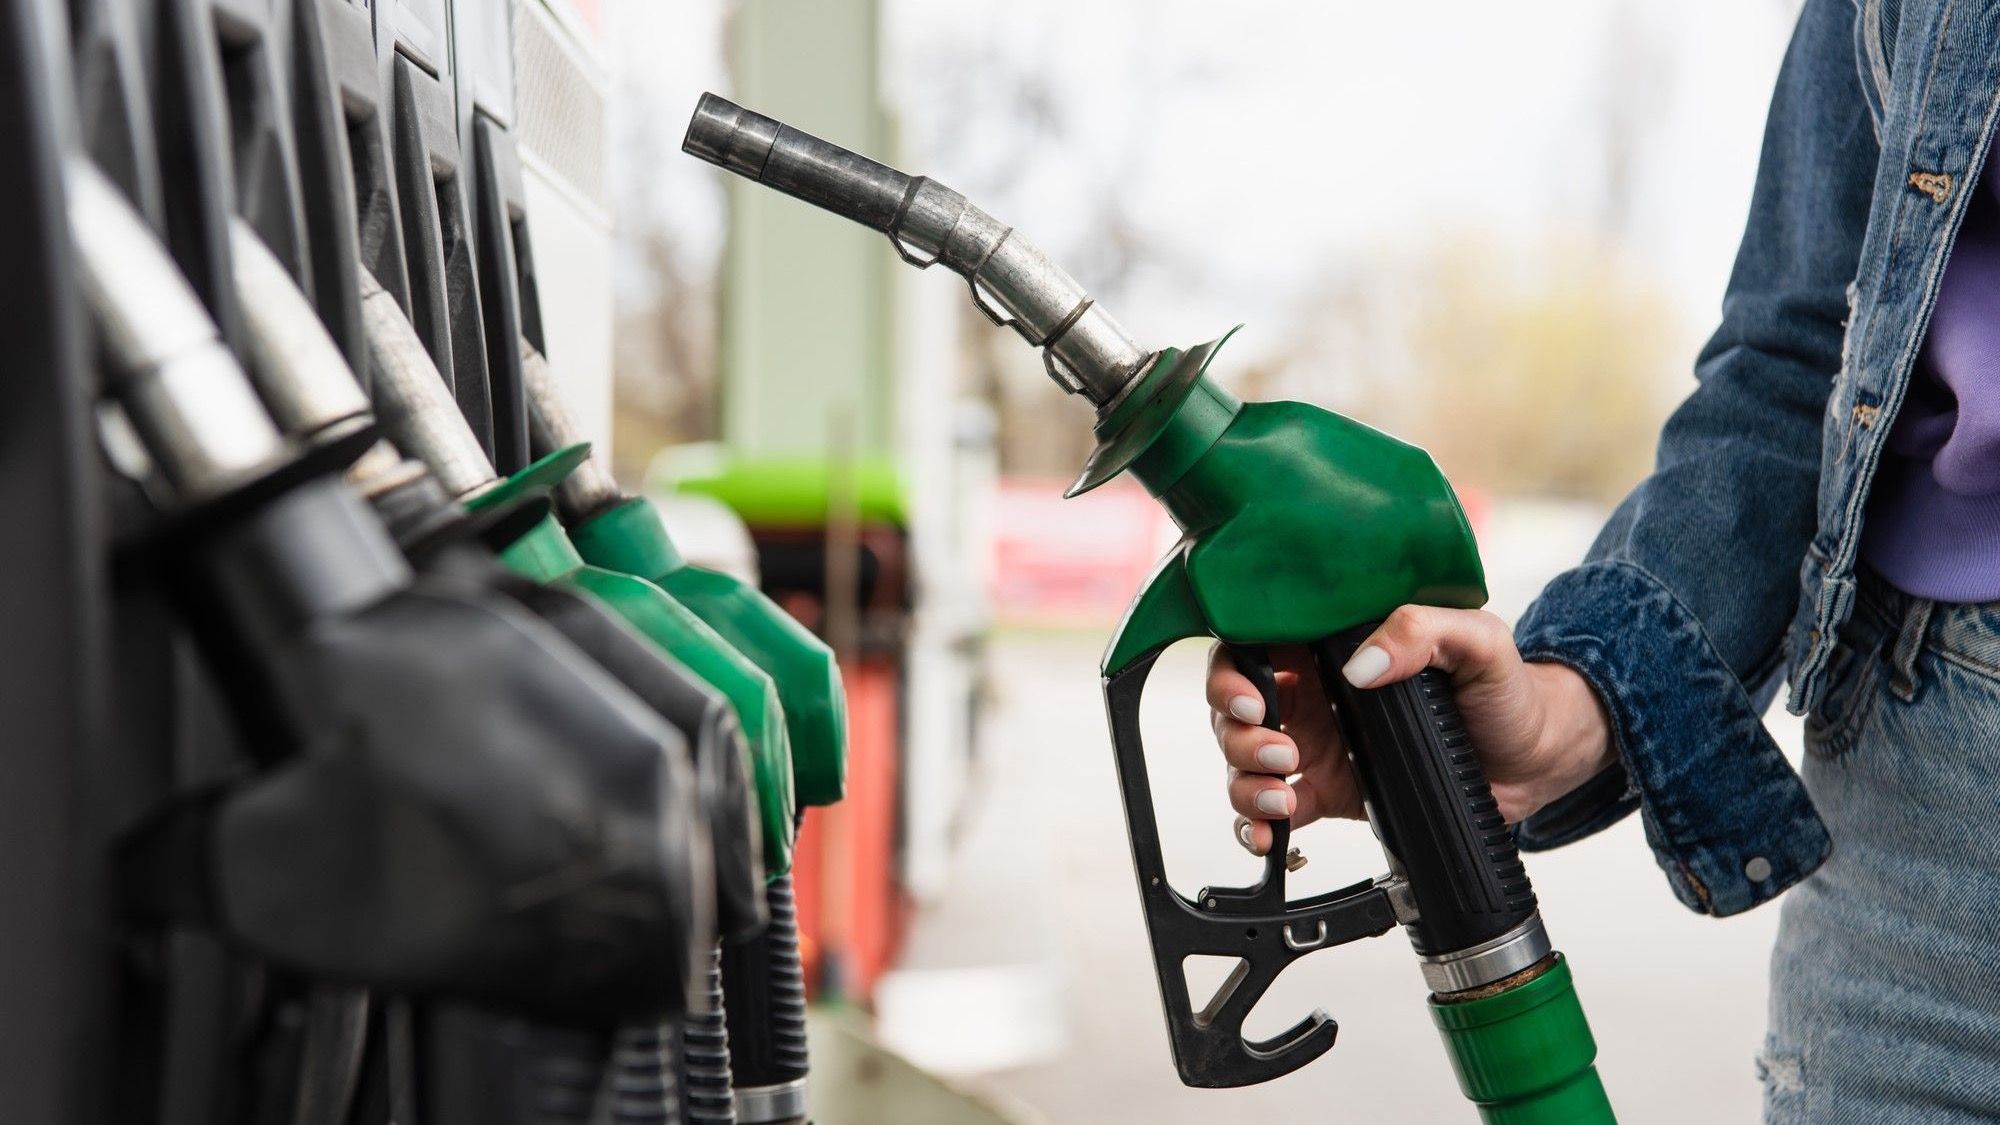 Кыргызстан занимает третье место по дешевизне бензина среди стран ЕАЭС